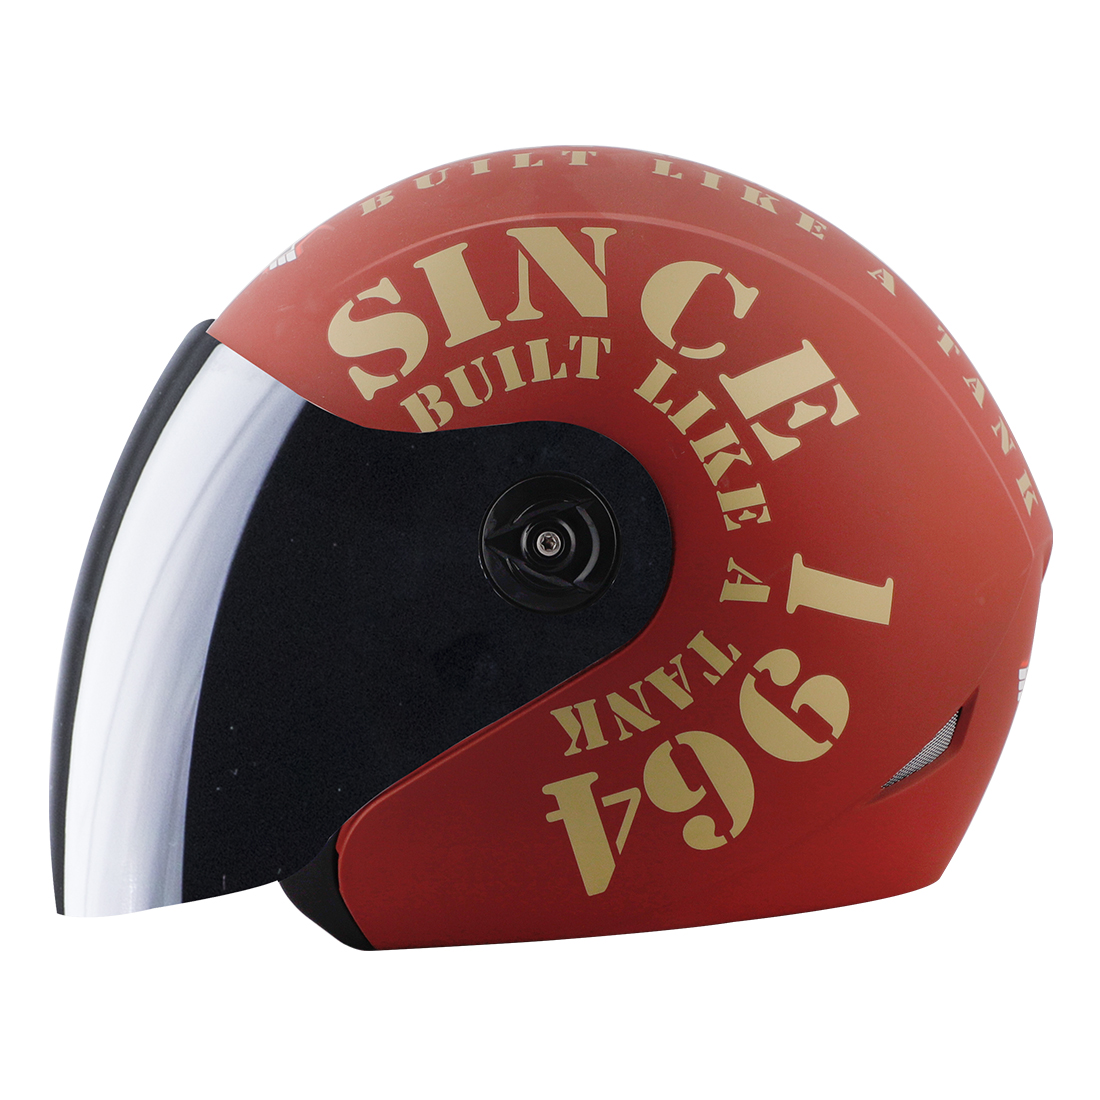 Steelbird SB-43 Yoyo Tank Open Face Graphic Helmet (Matt Maroon Gold With Smoke Visor)